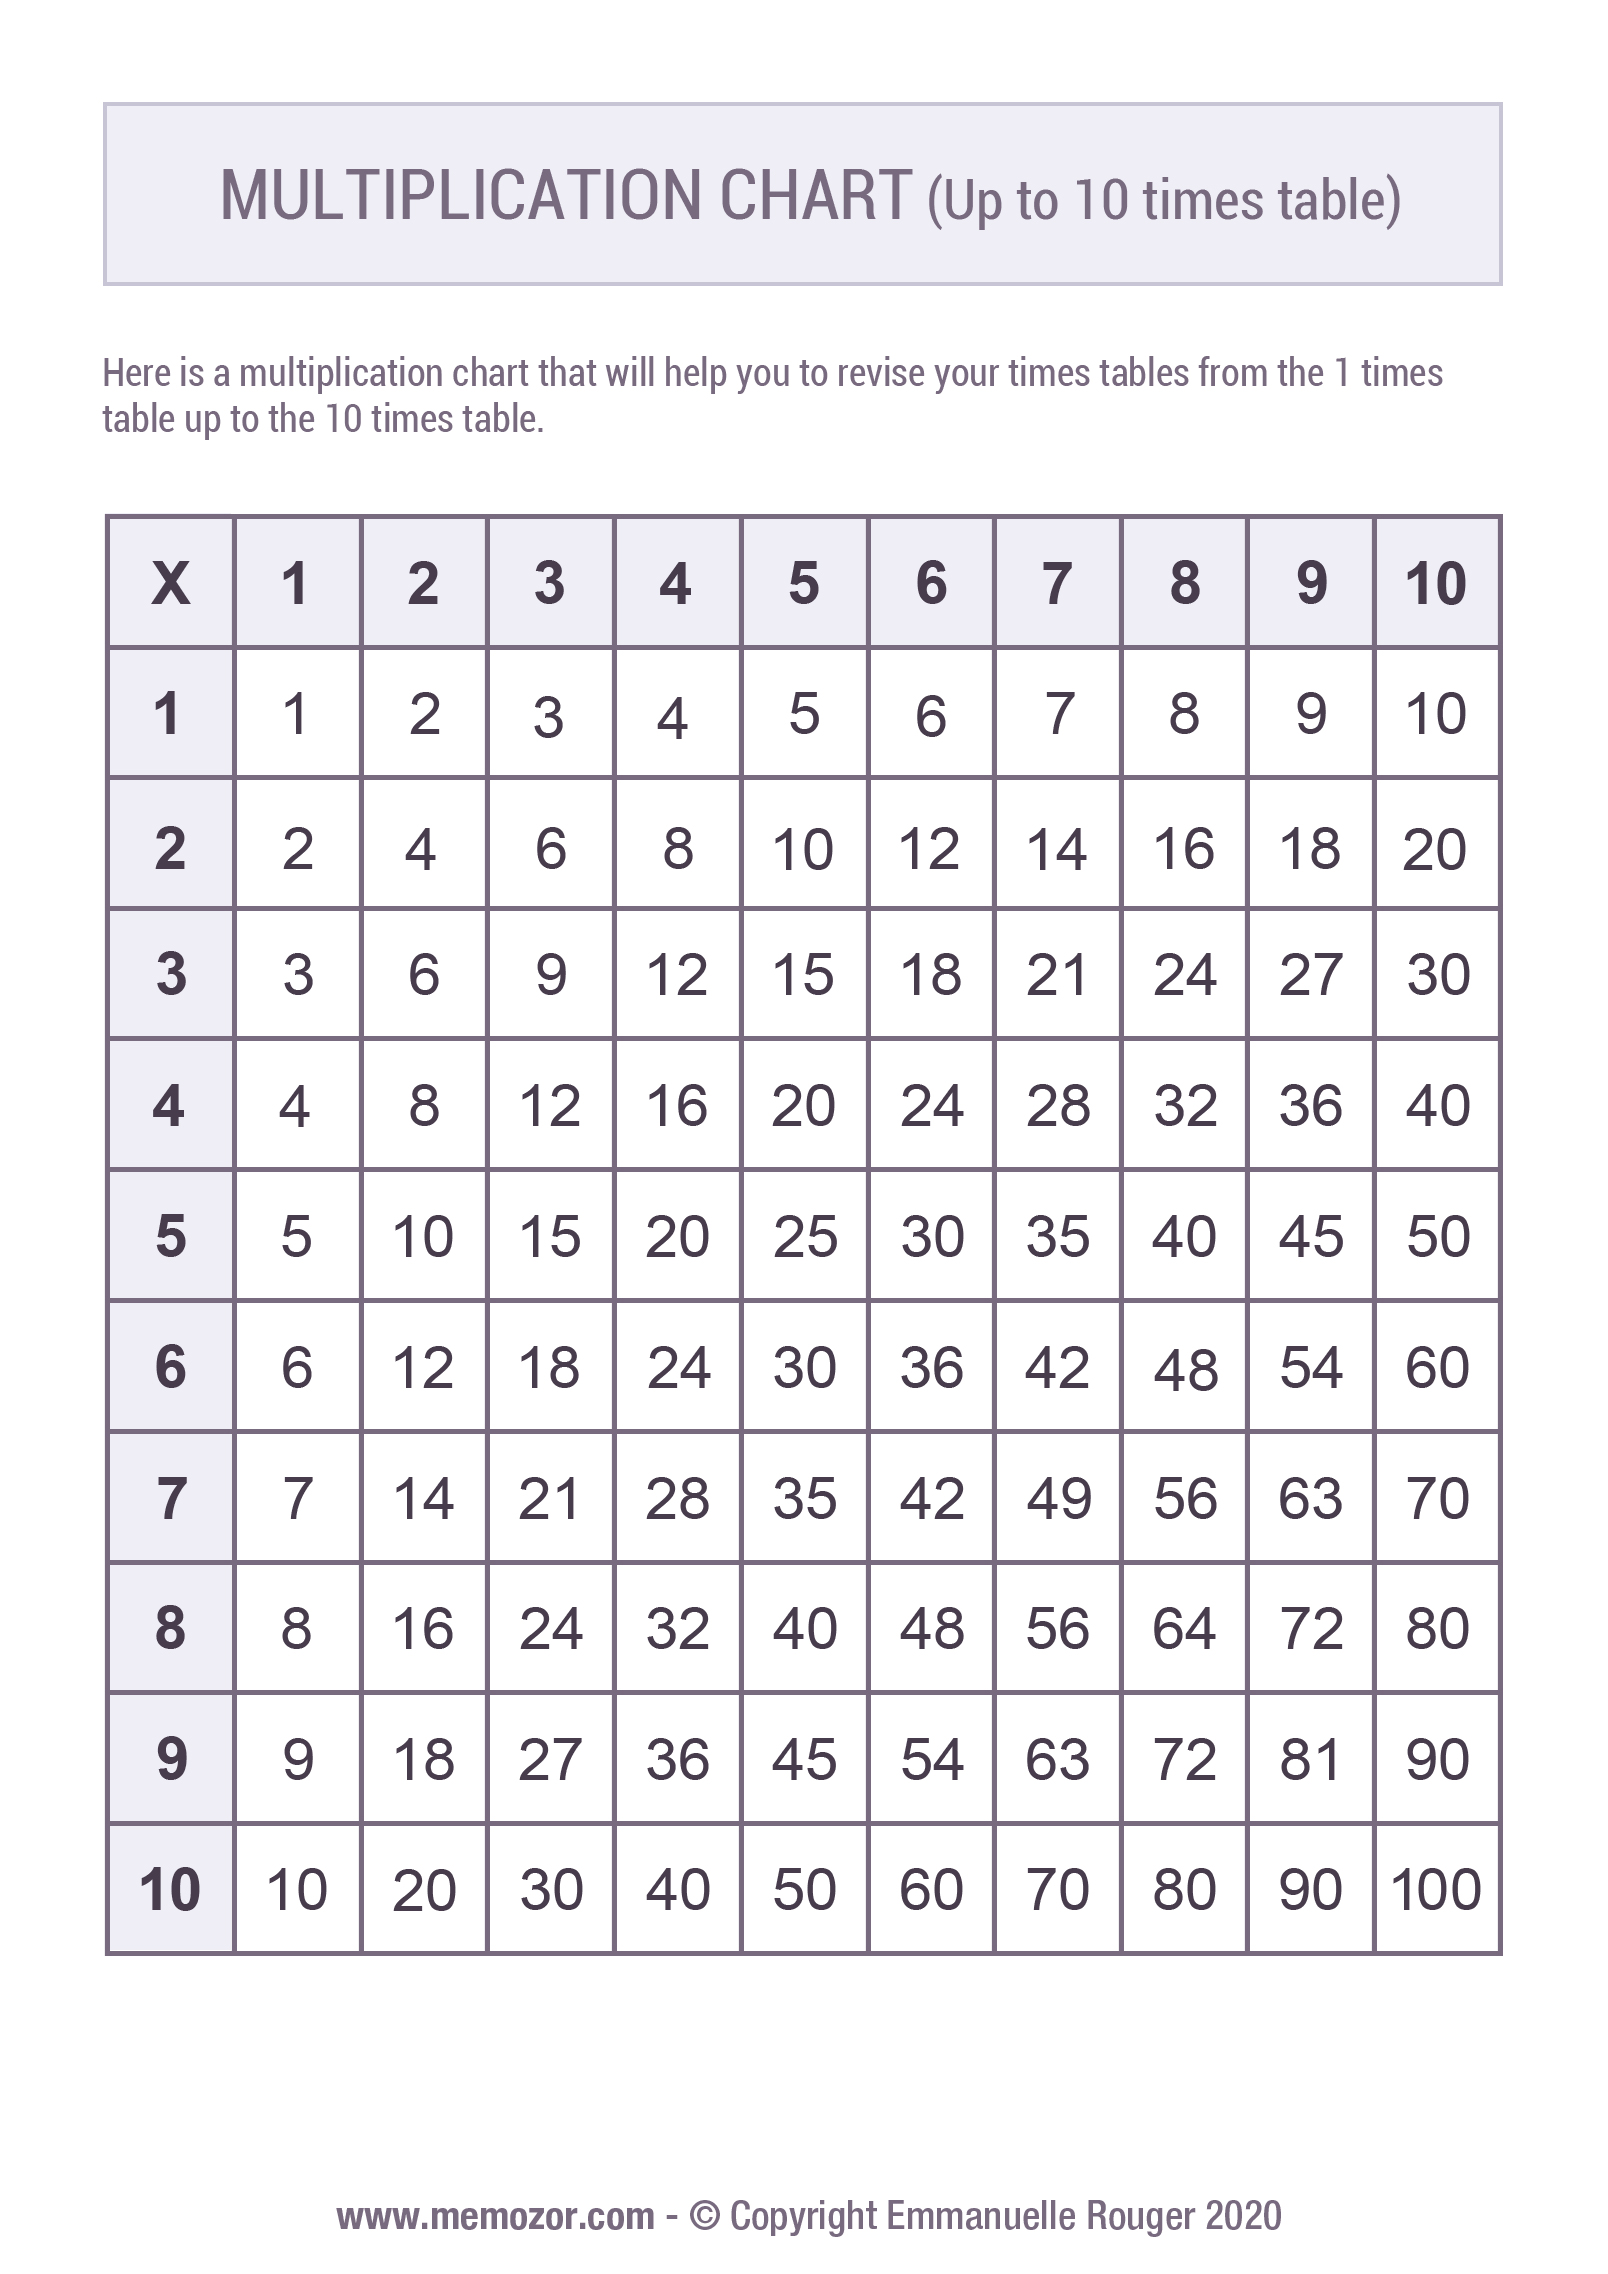 printable-multiplication-chart-1-10-tricks-free-memozor